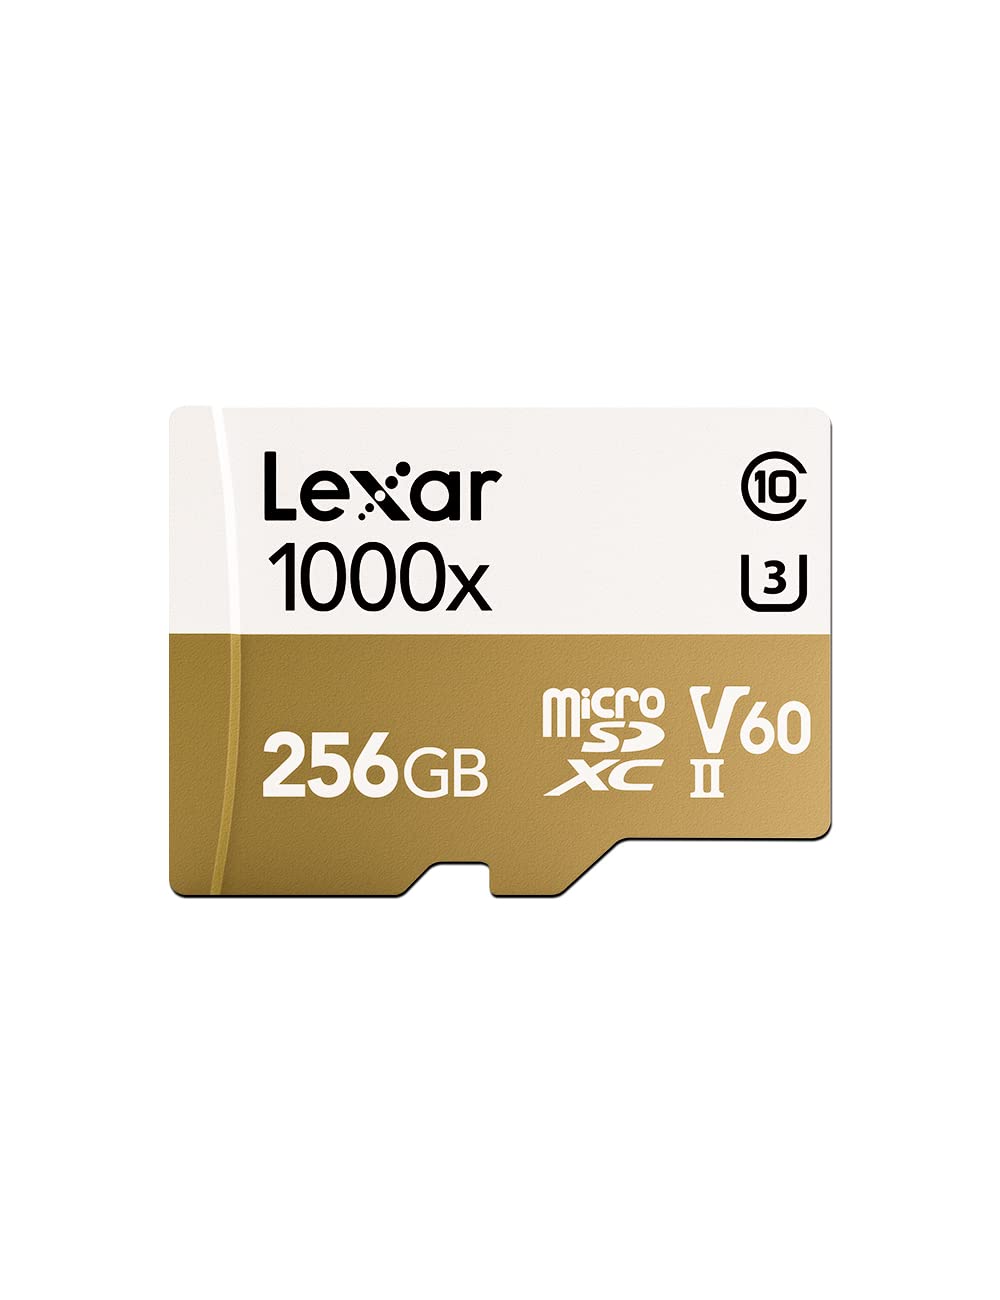 Lexar 256GB Micro SD Card, microSDXC UHS-II MLC Flash Memory Card Professional 1000x with Adapter, Up to 150MB/s Read, 90MB/s Write, V60, U3, Class10, High Speed TF Card 256GB V60